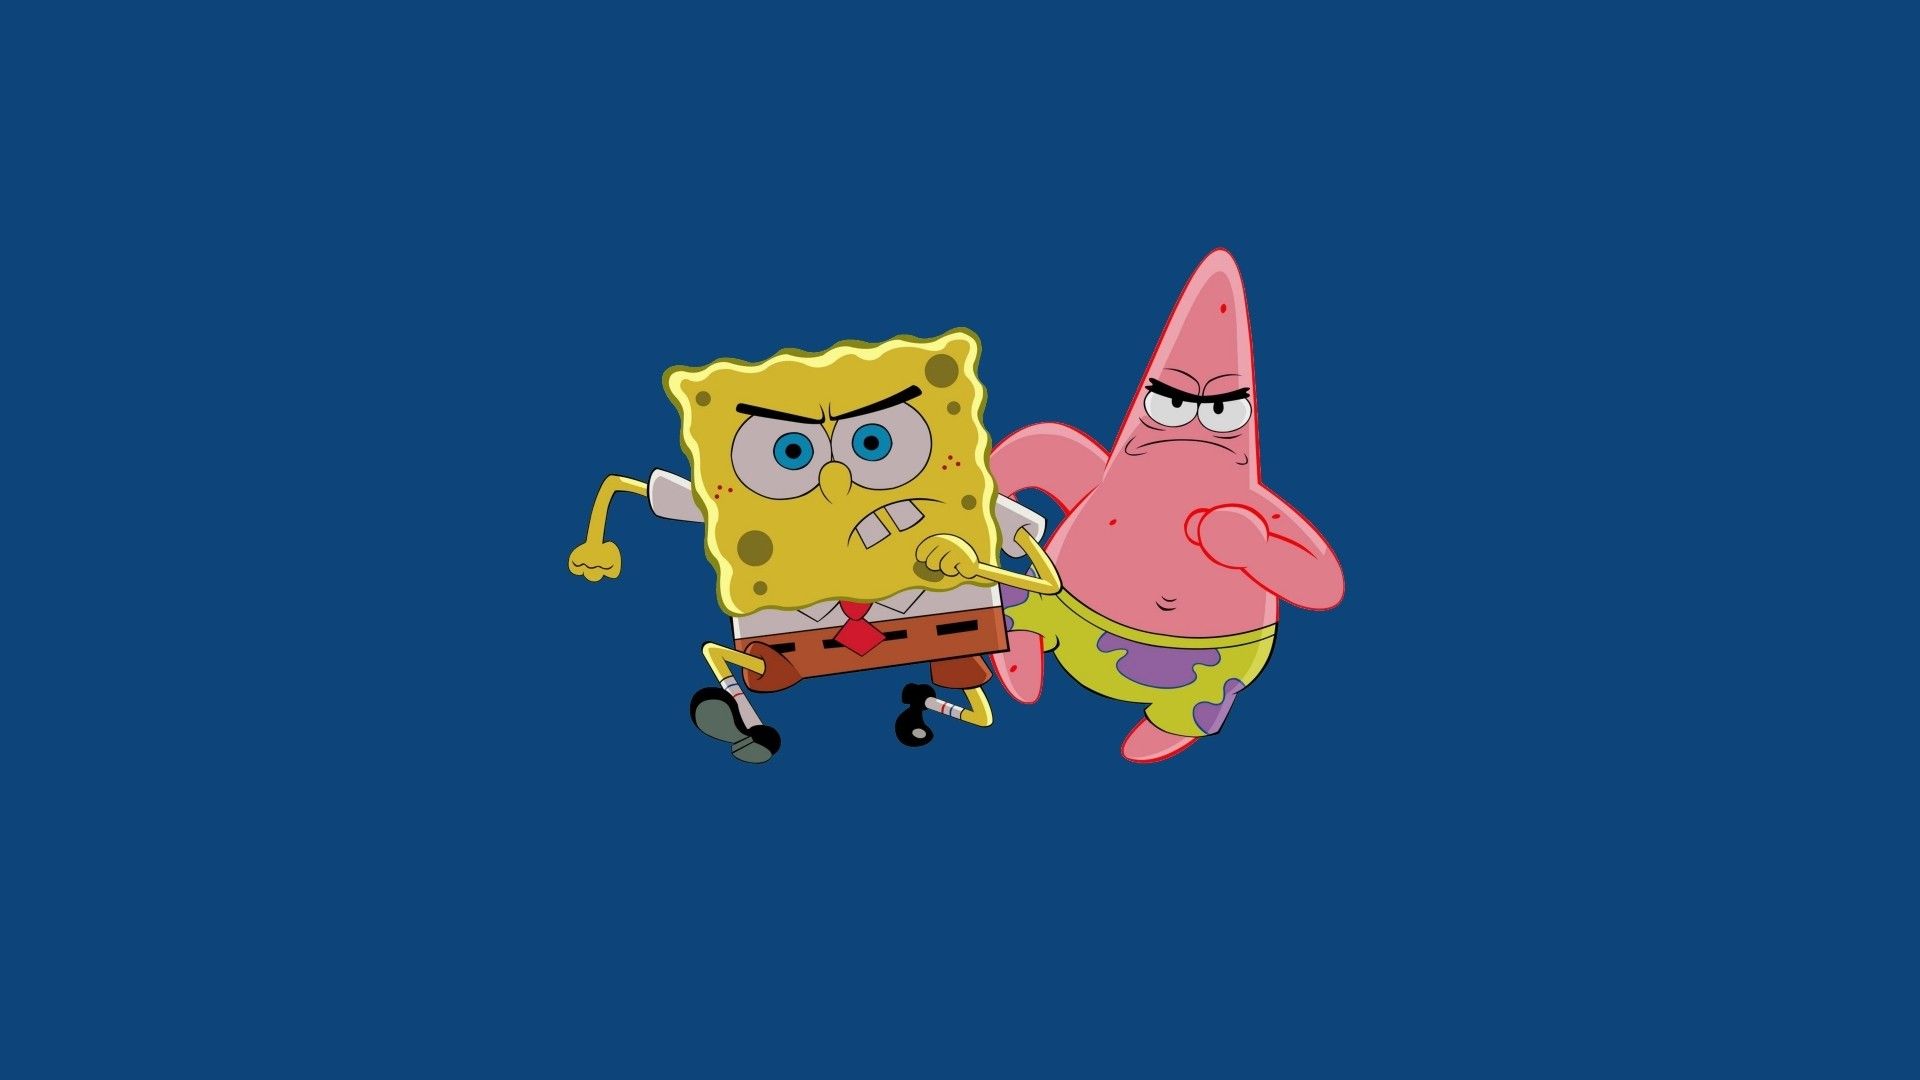 SpongeBob and Patrick simple wallpaper wallpaper download. Wallpaper, picture, photo